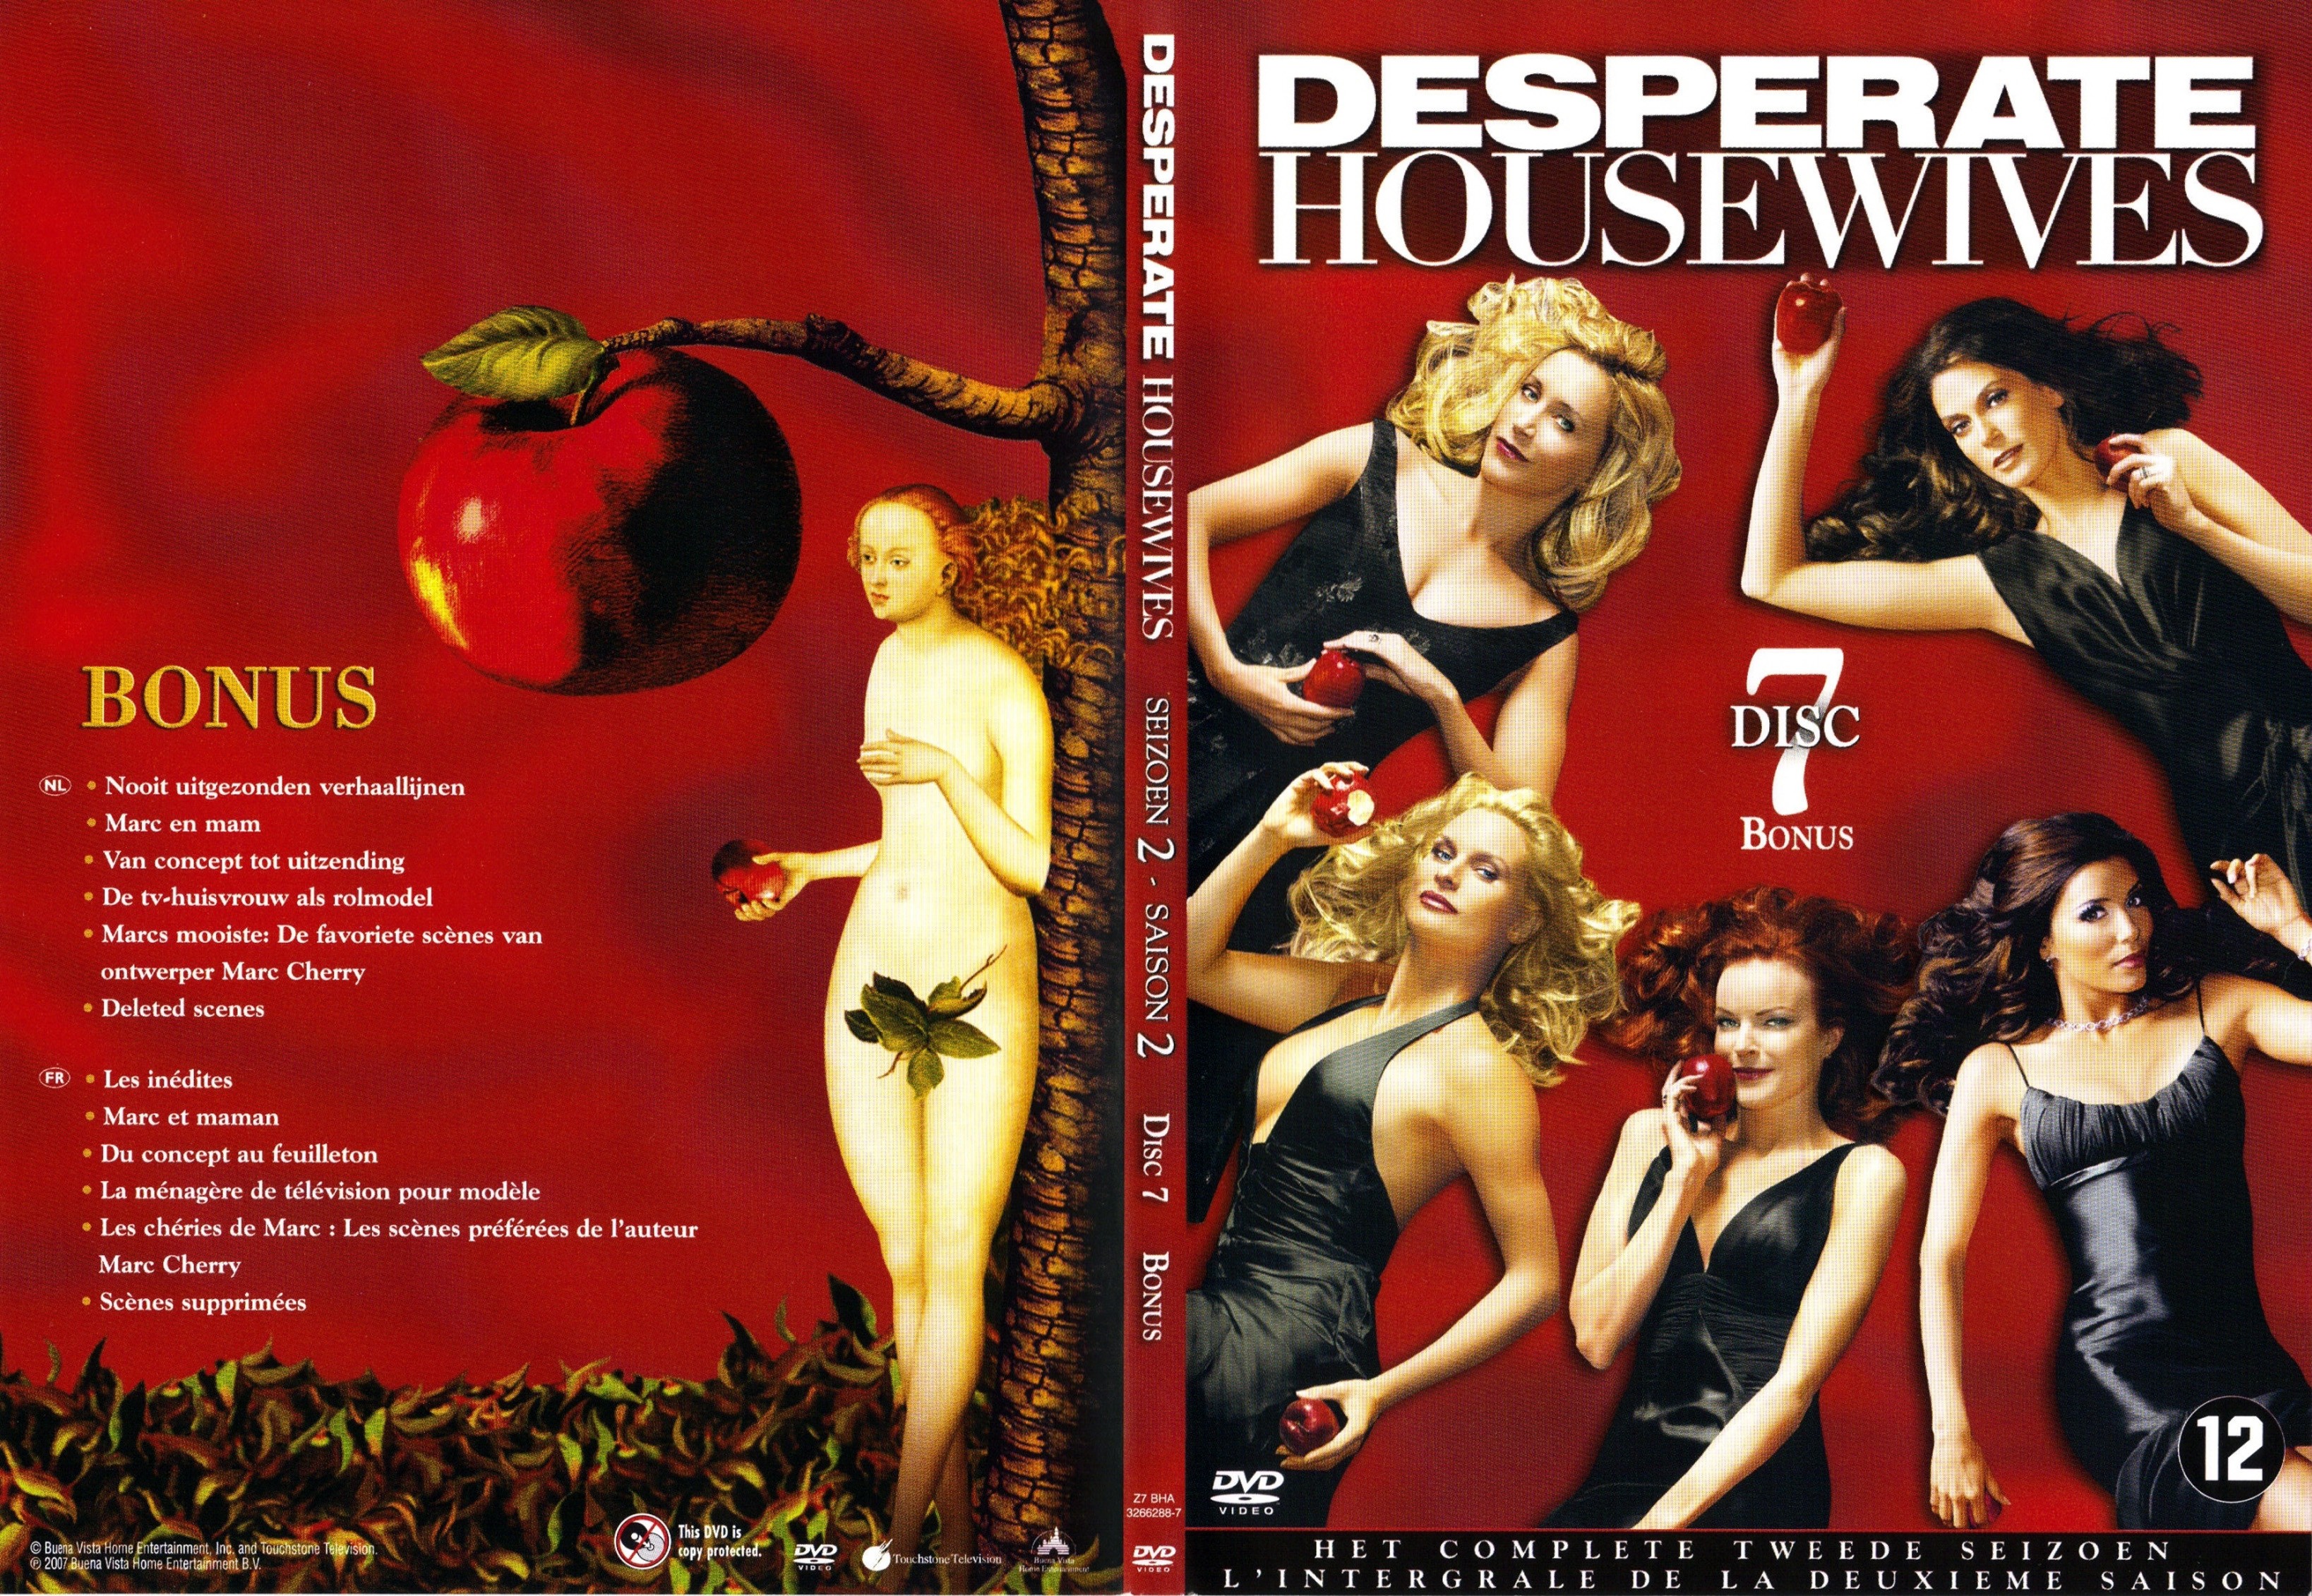 Jaquette DVD Desperate Housewives saison 2 DVD 7